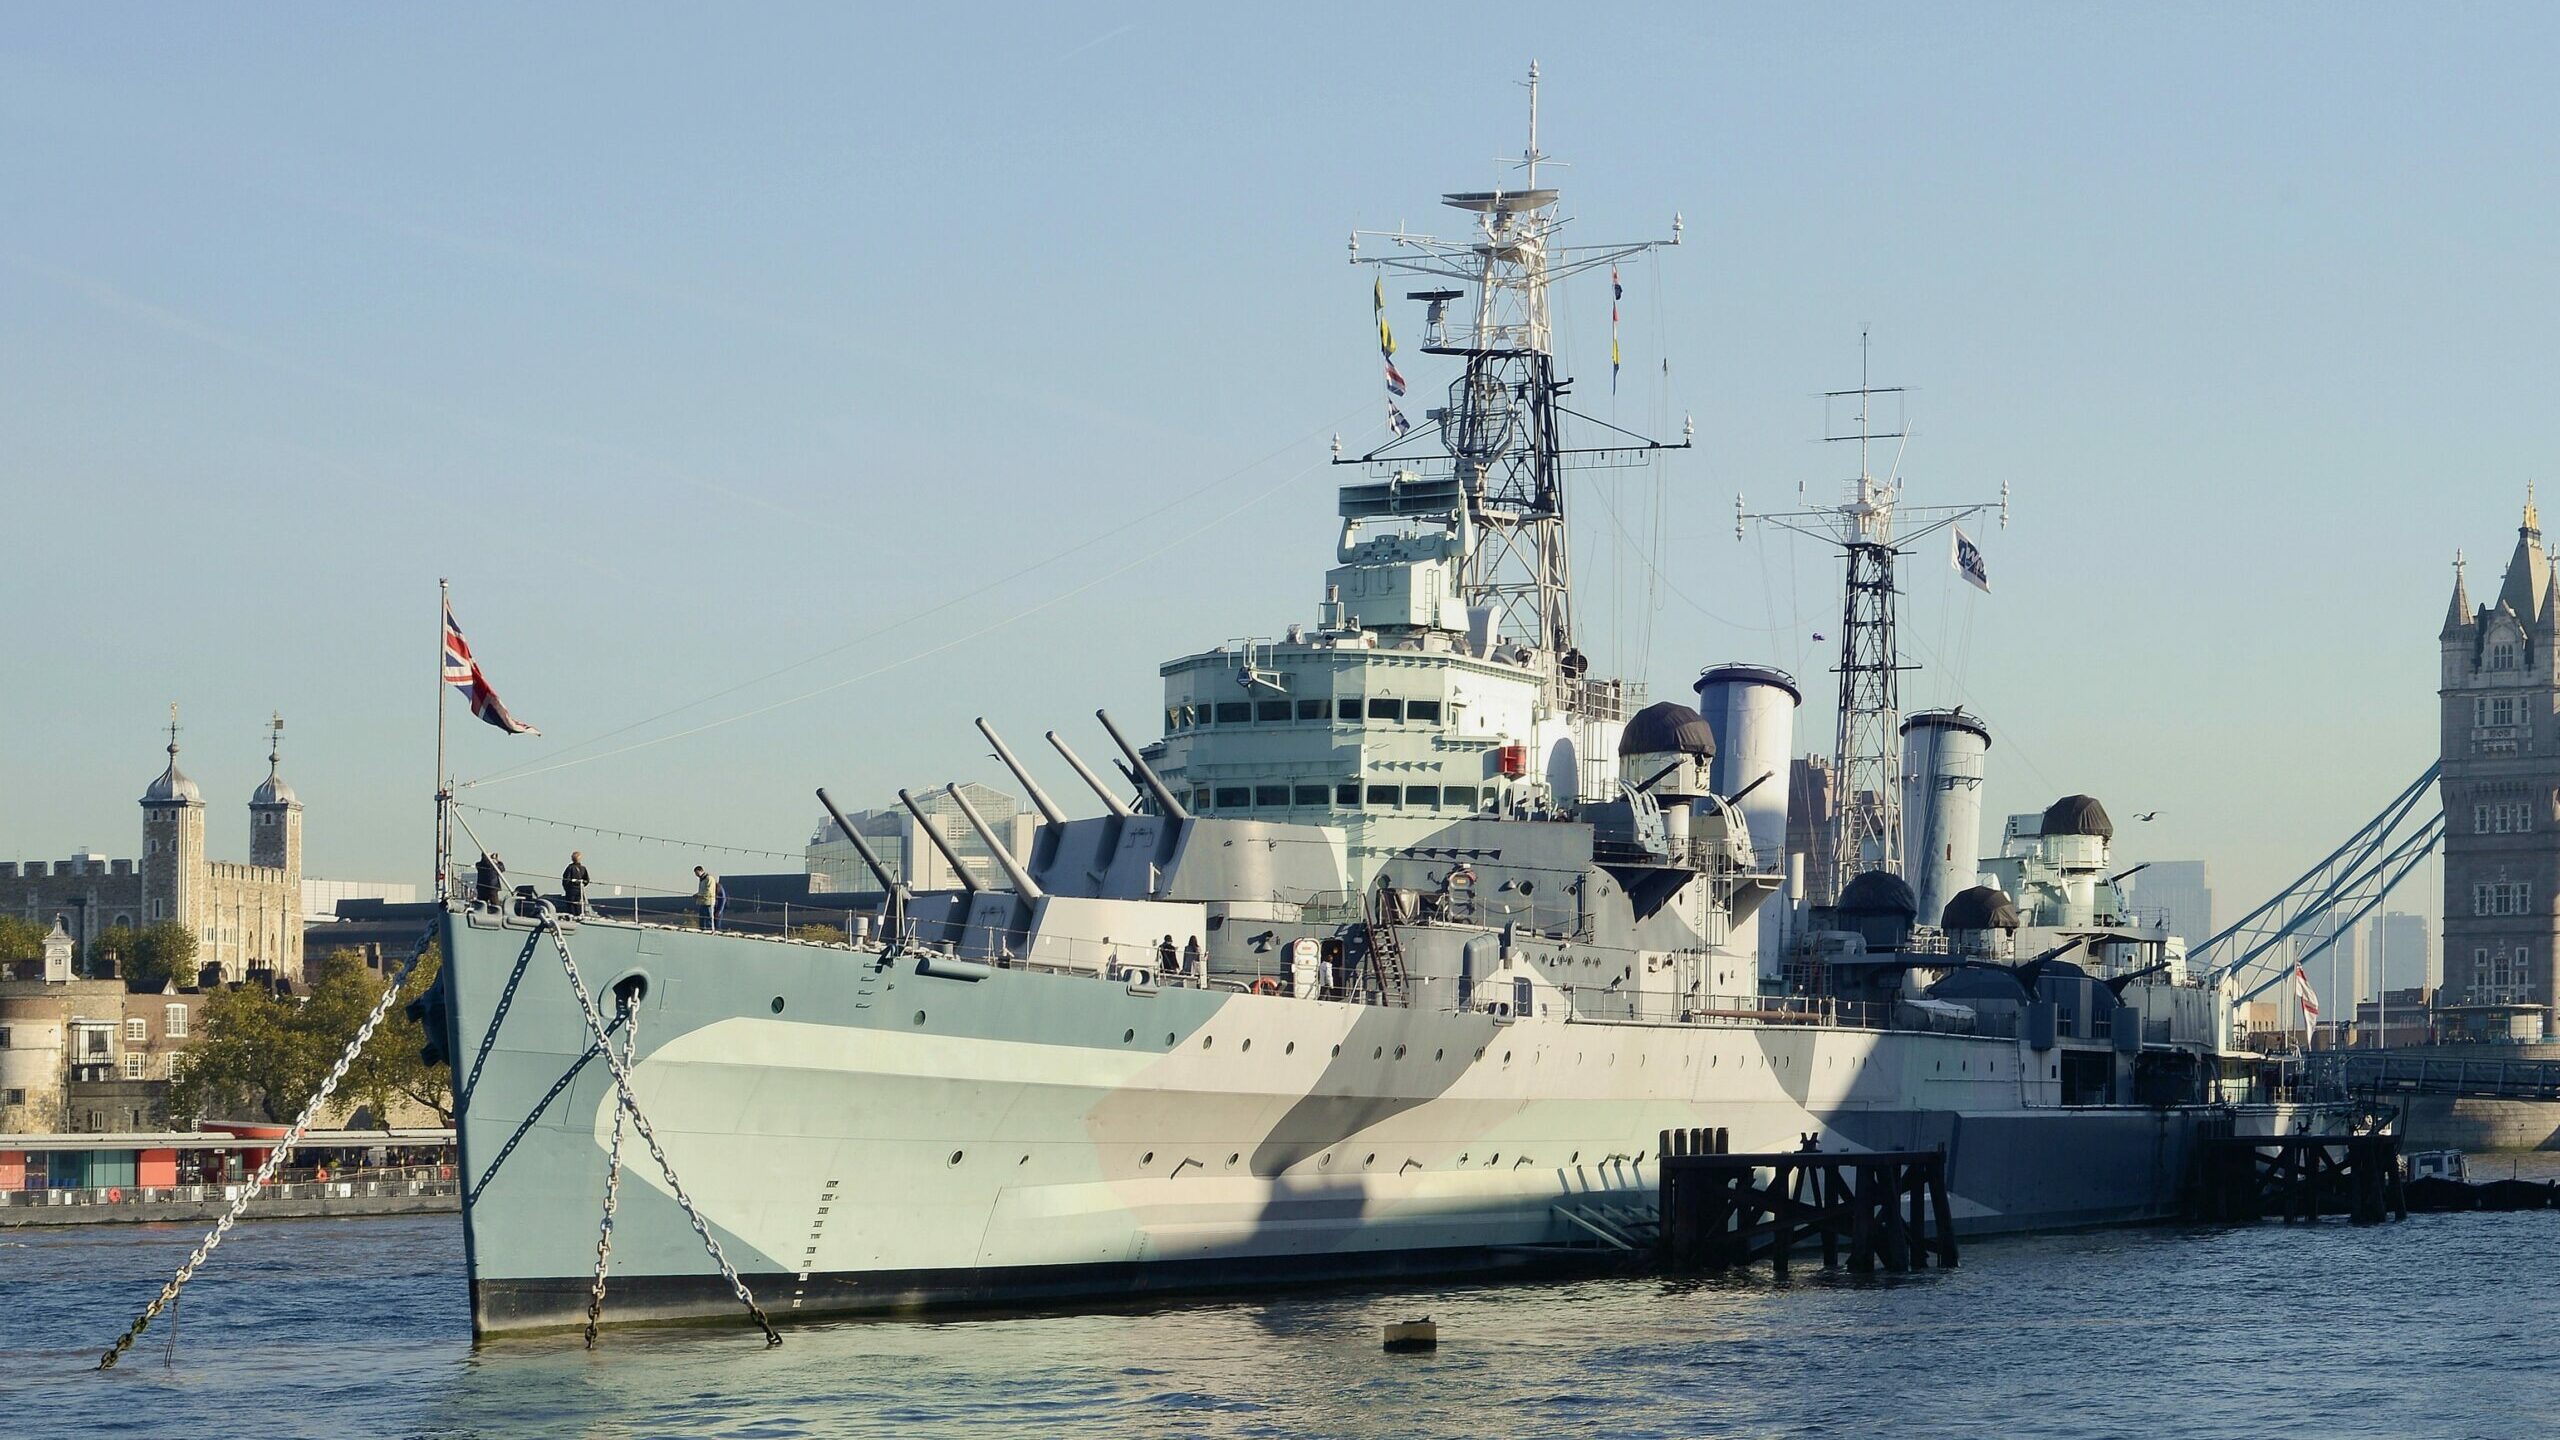 HMS Belfast, London image